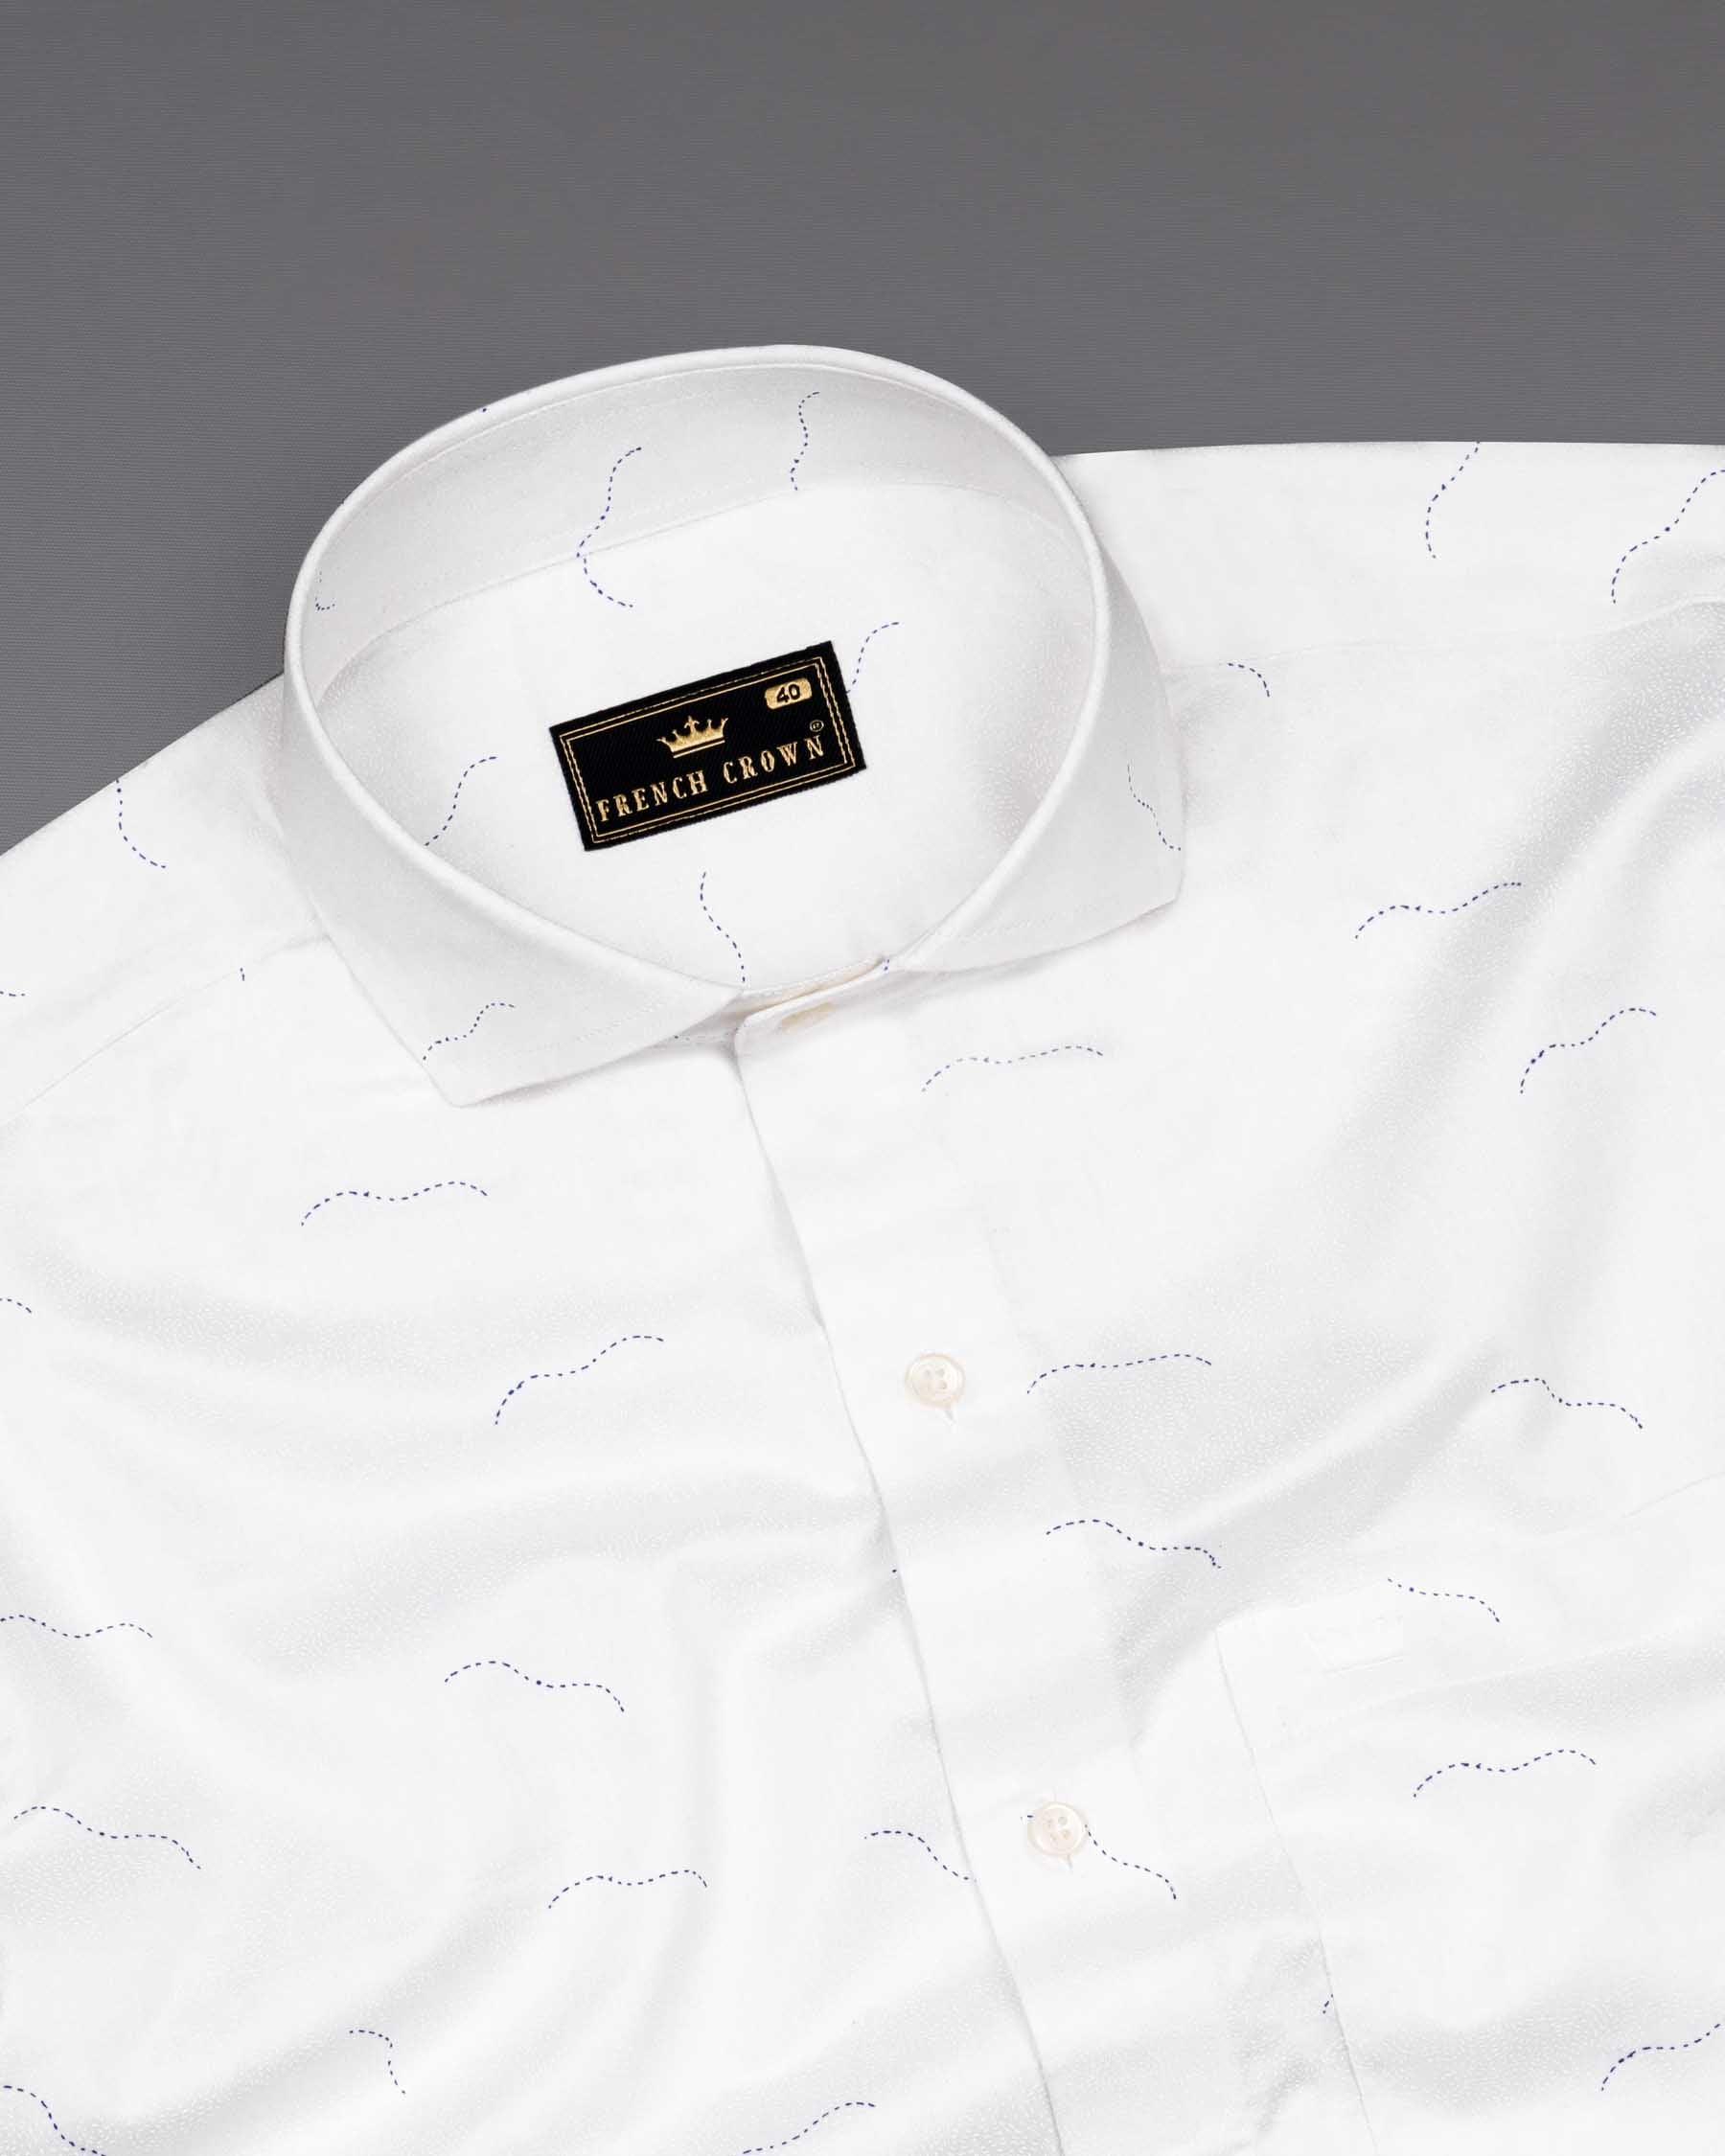 Bright White Arc Printed Super Soft Premium Cotton Shirt